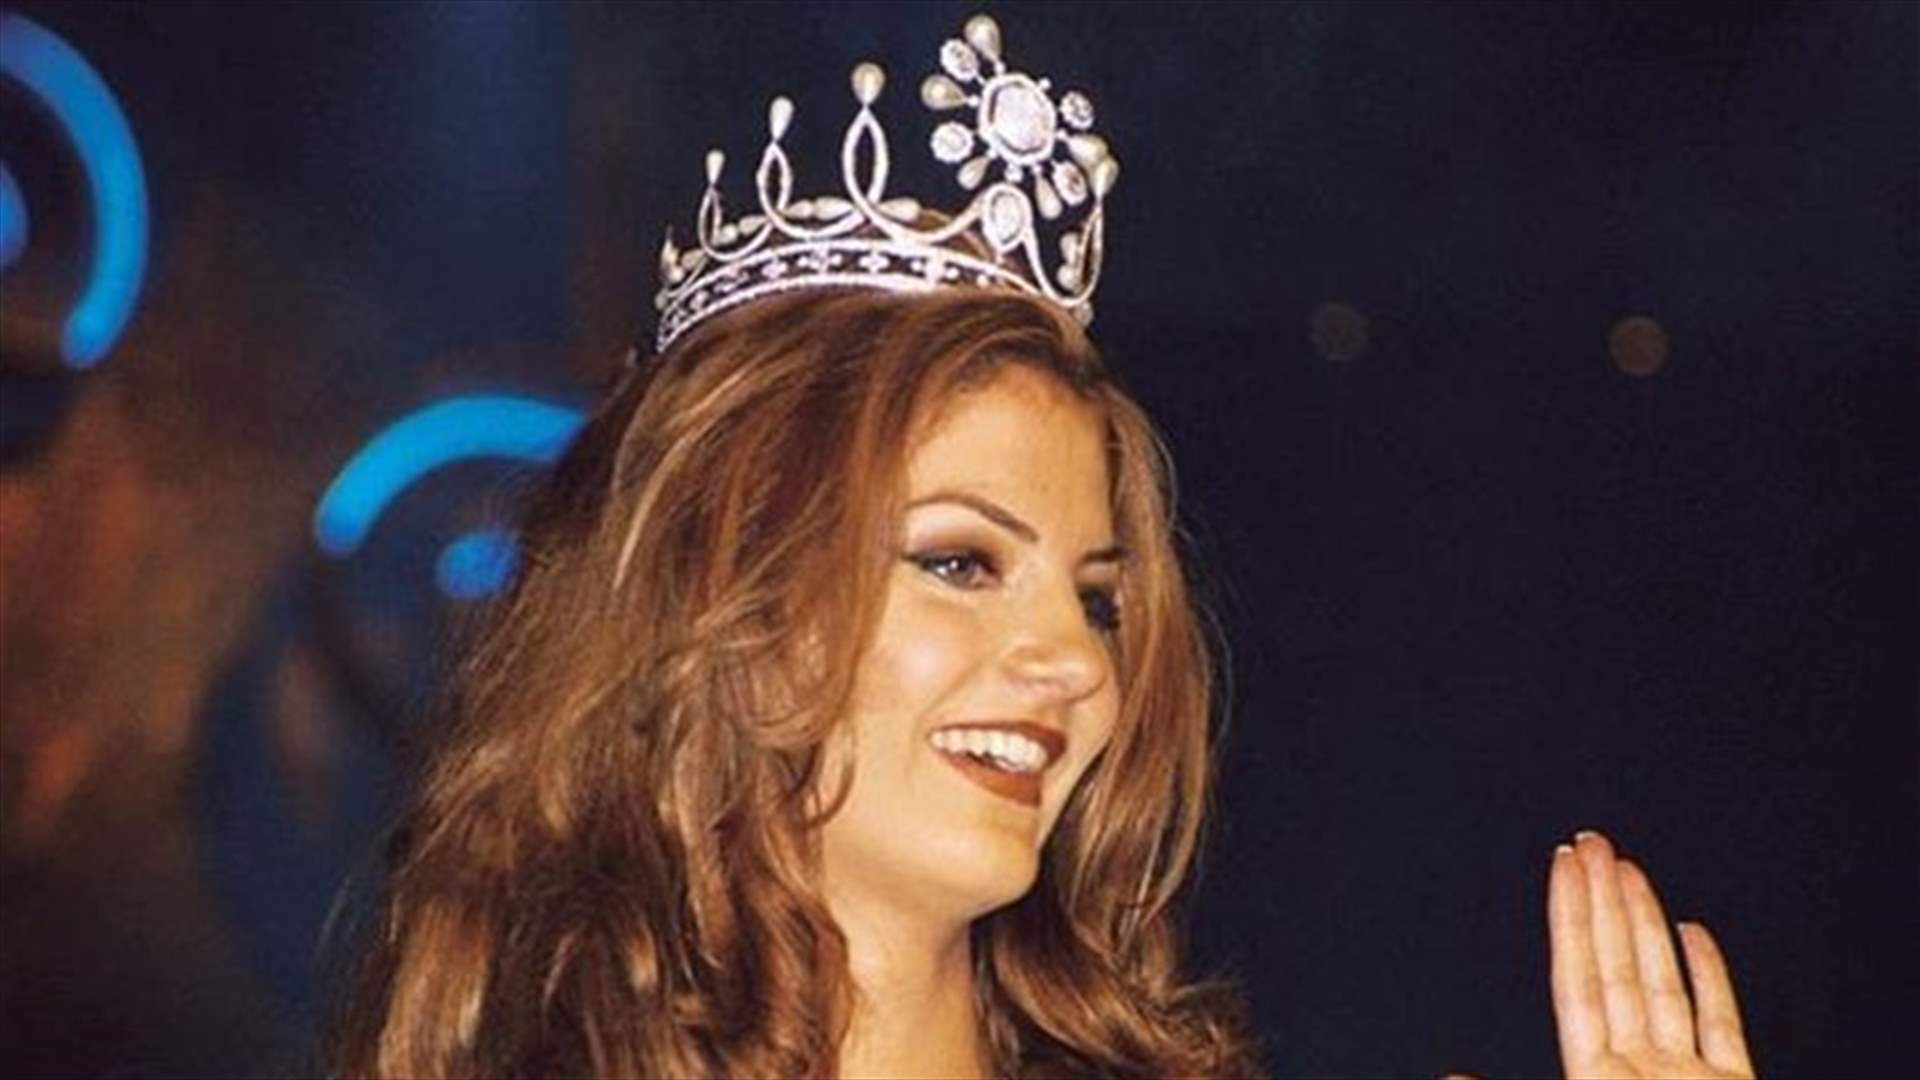 ملكة جمال لبنان ساندرا رزق تحتفل بعيد ميلادها... كيف بدت بعد 21 عاماً على تتويجها؟ (صور)